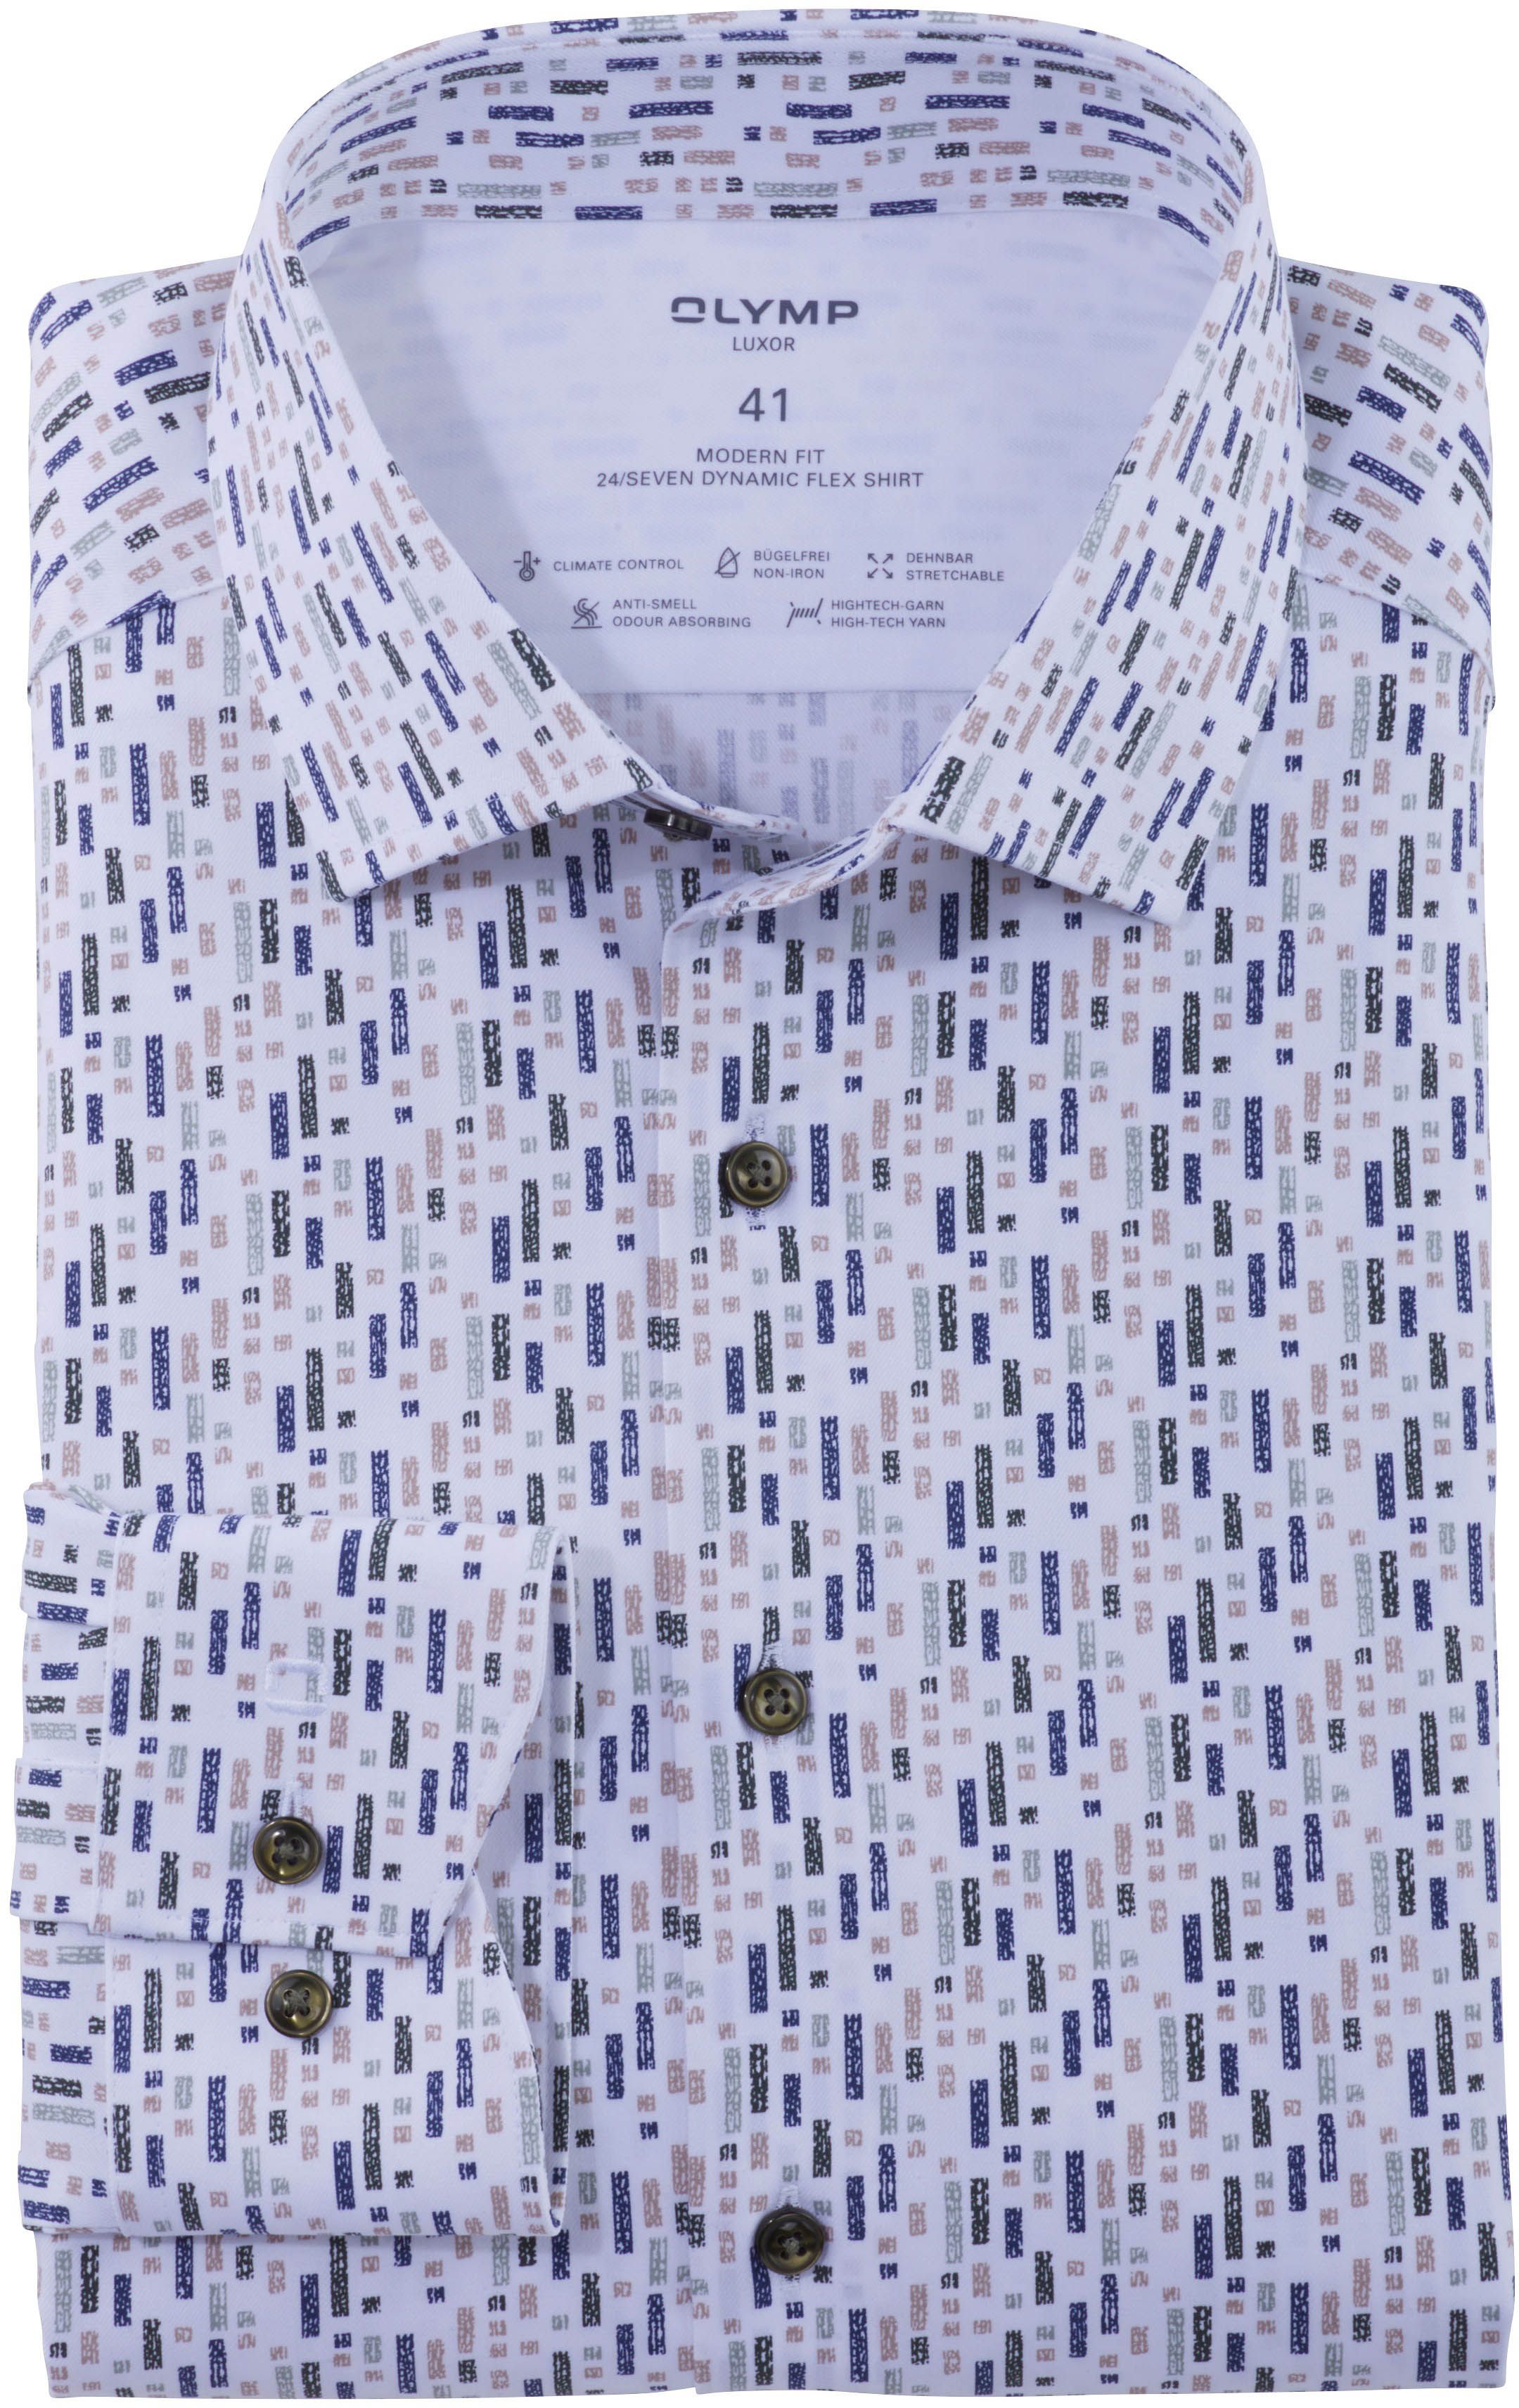 OLYMP Luxor Shirt 24/Seven Print White size 45